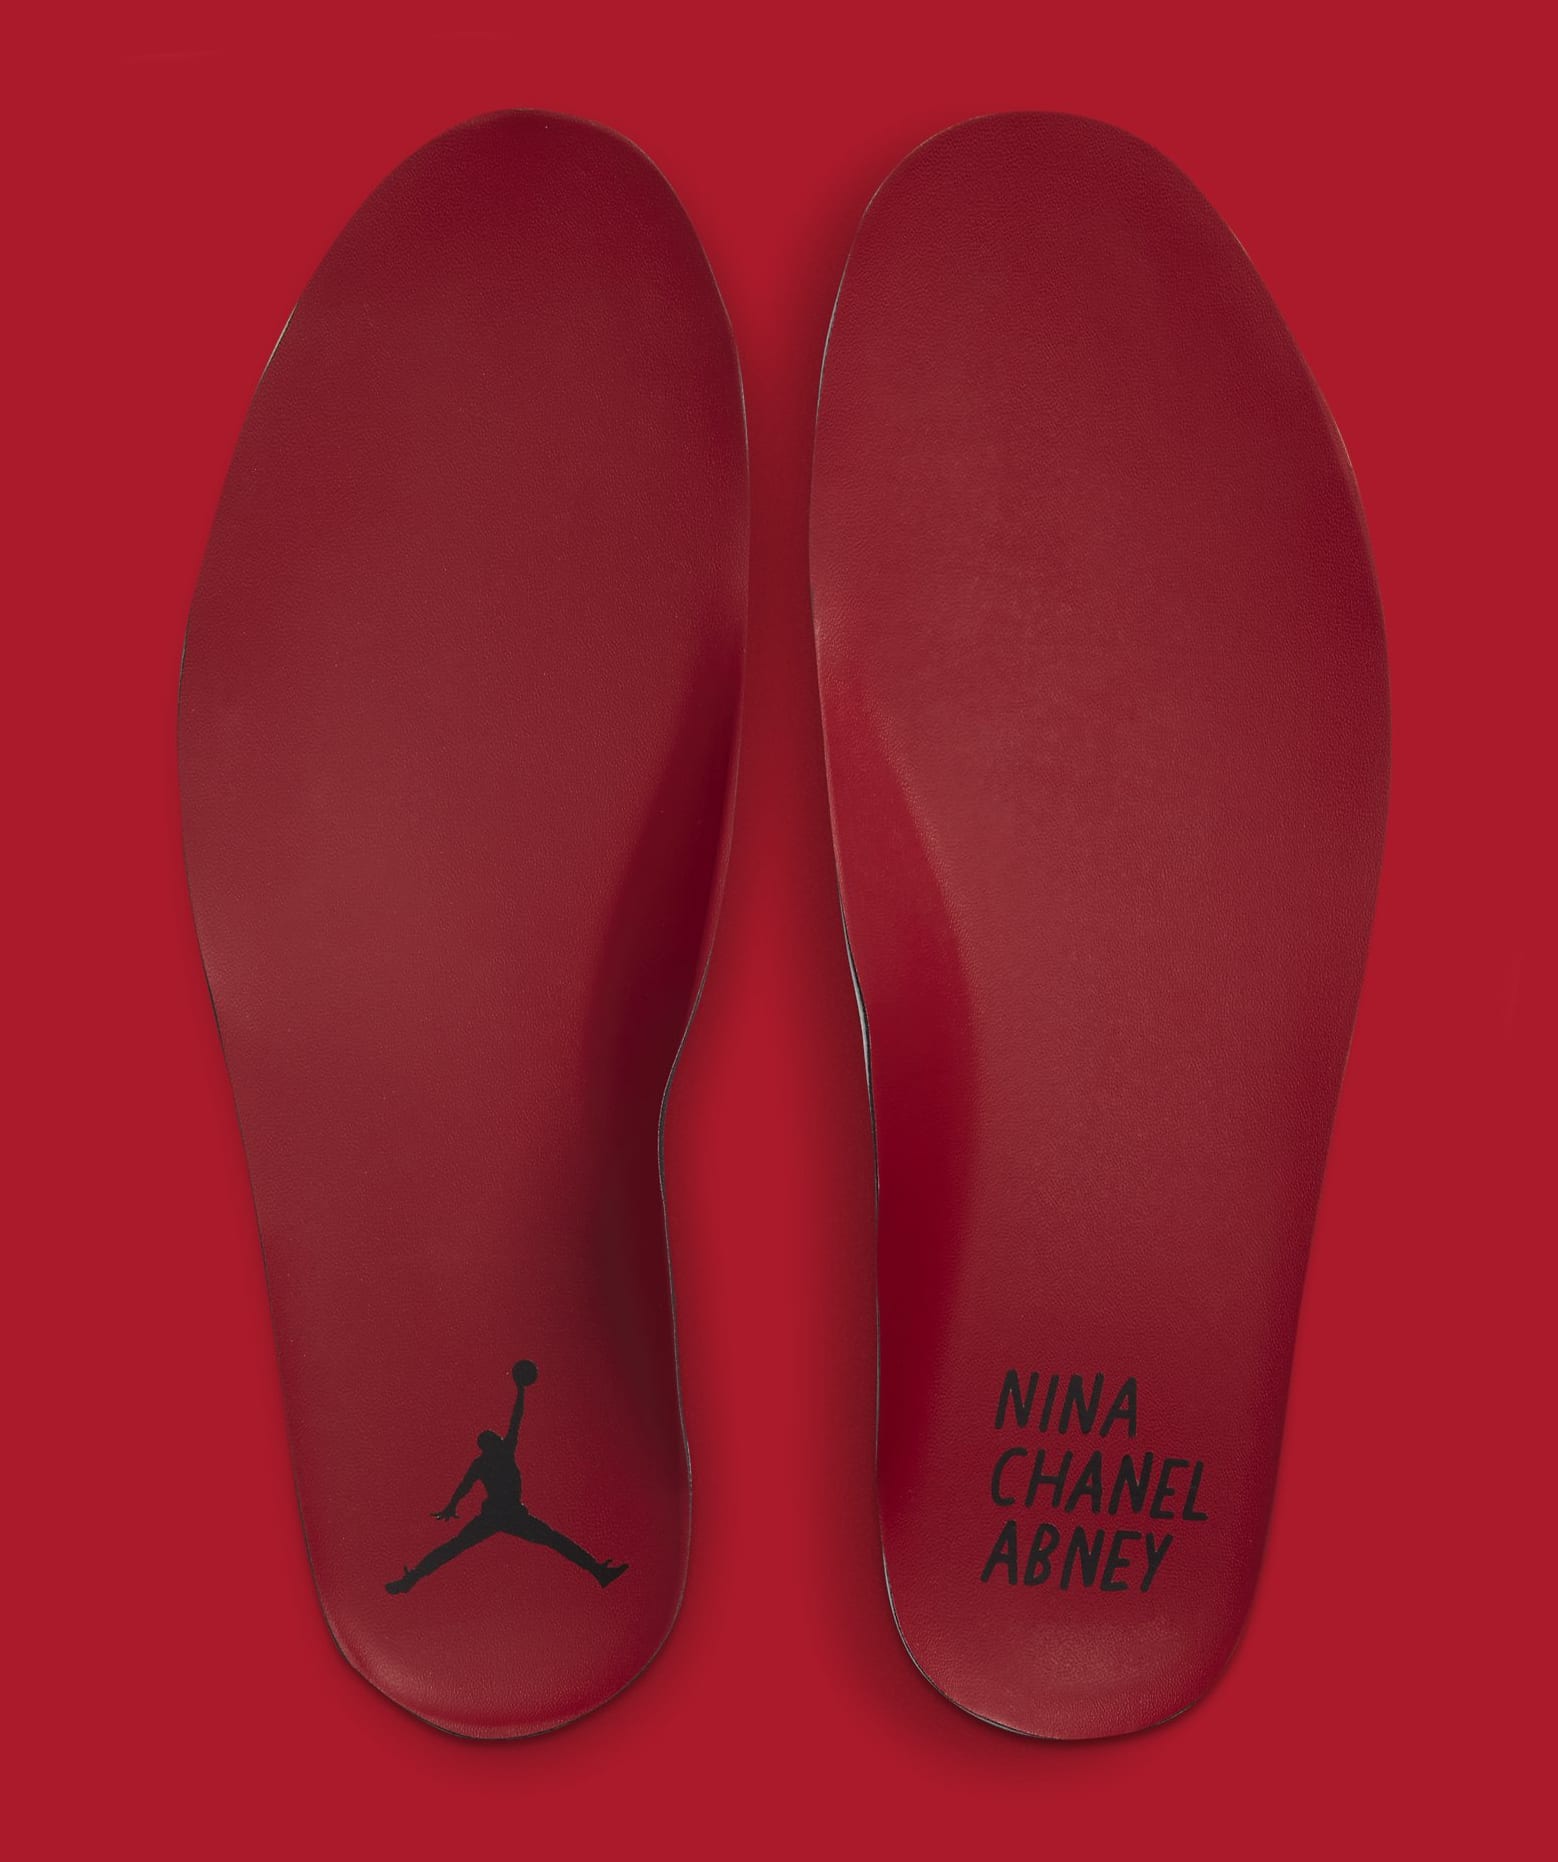 Nina Chanel Abney's Air Jordan 2 Collabs Drop in July